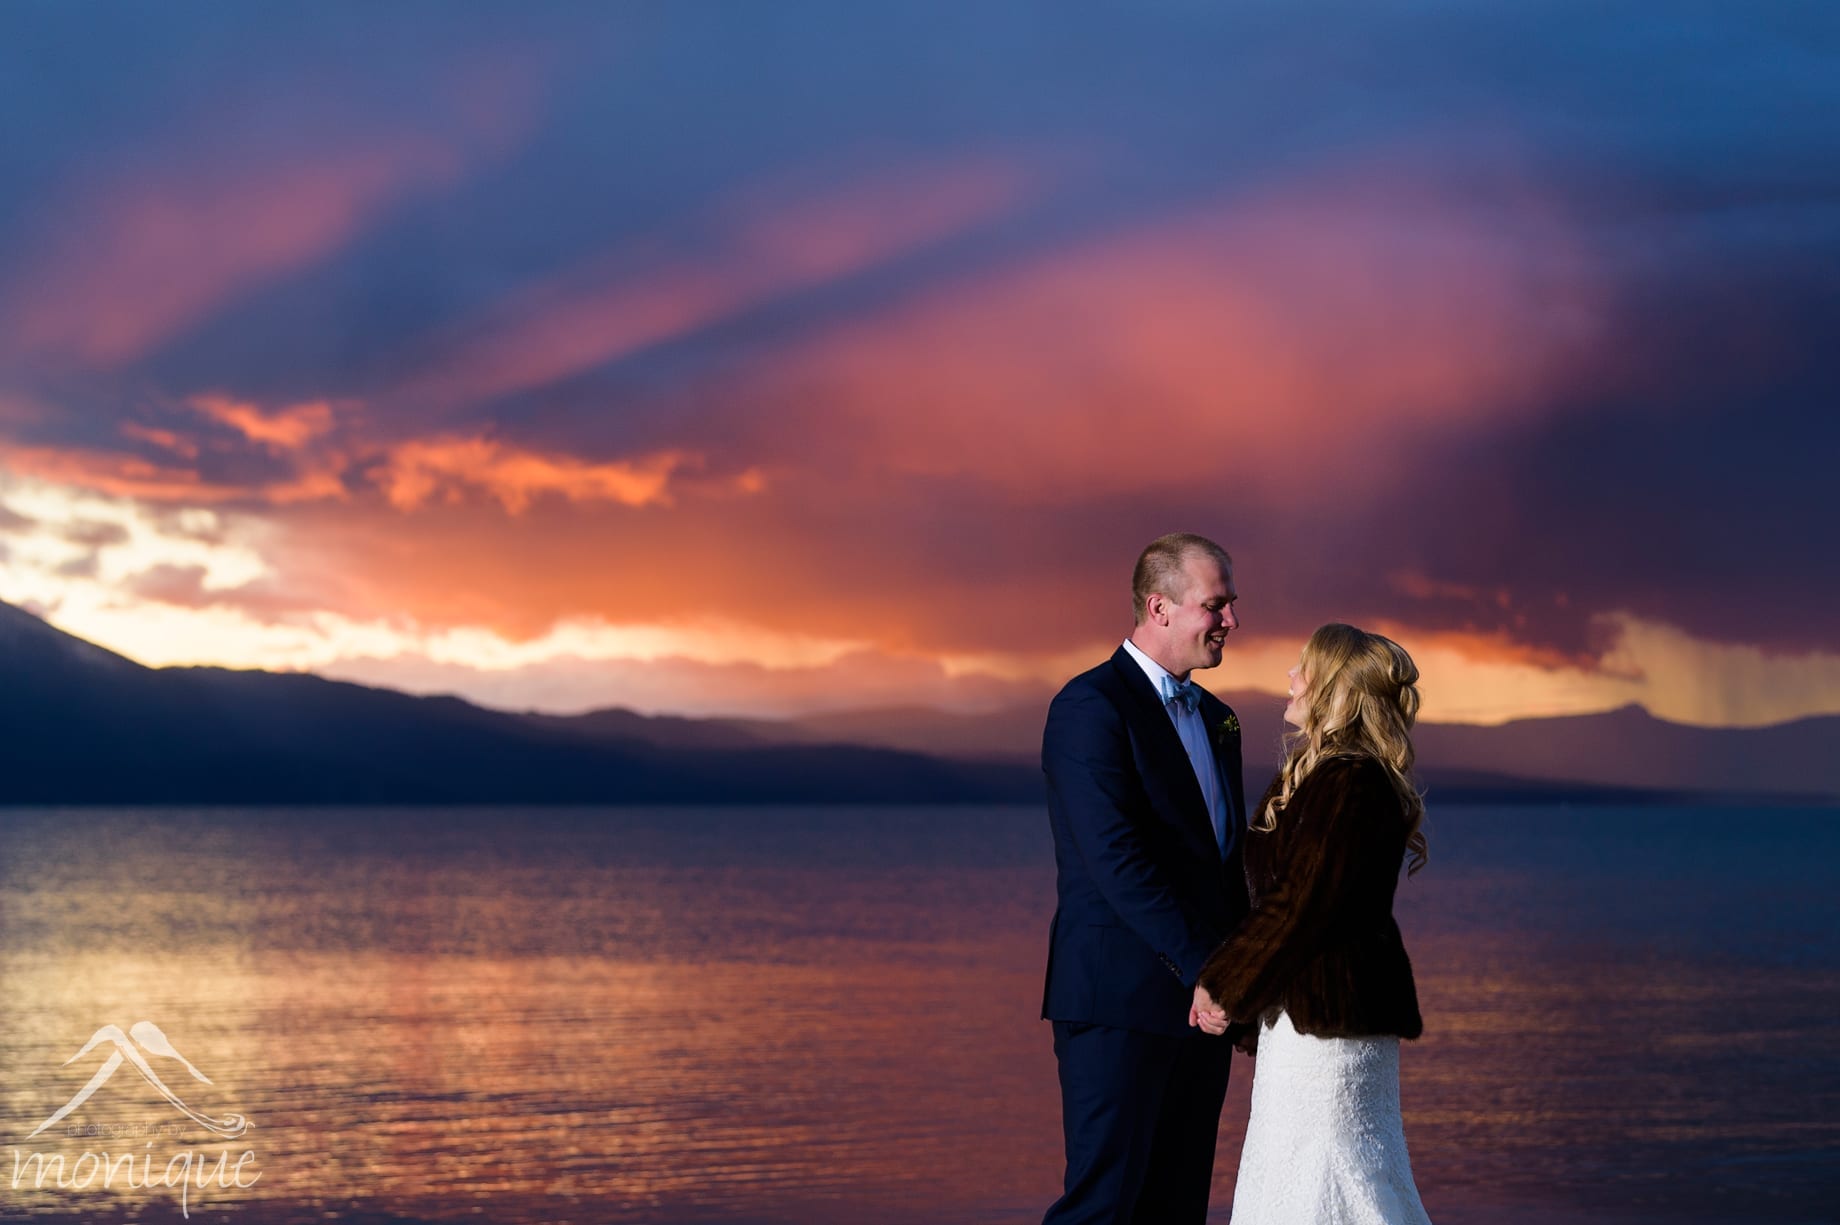 Edgewood wedding photography at Lake Tahoe with an amazing sunset